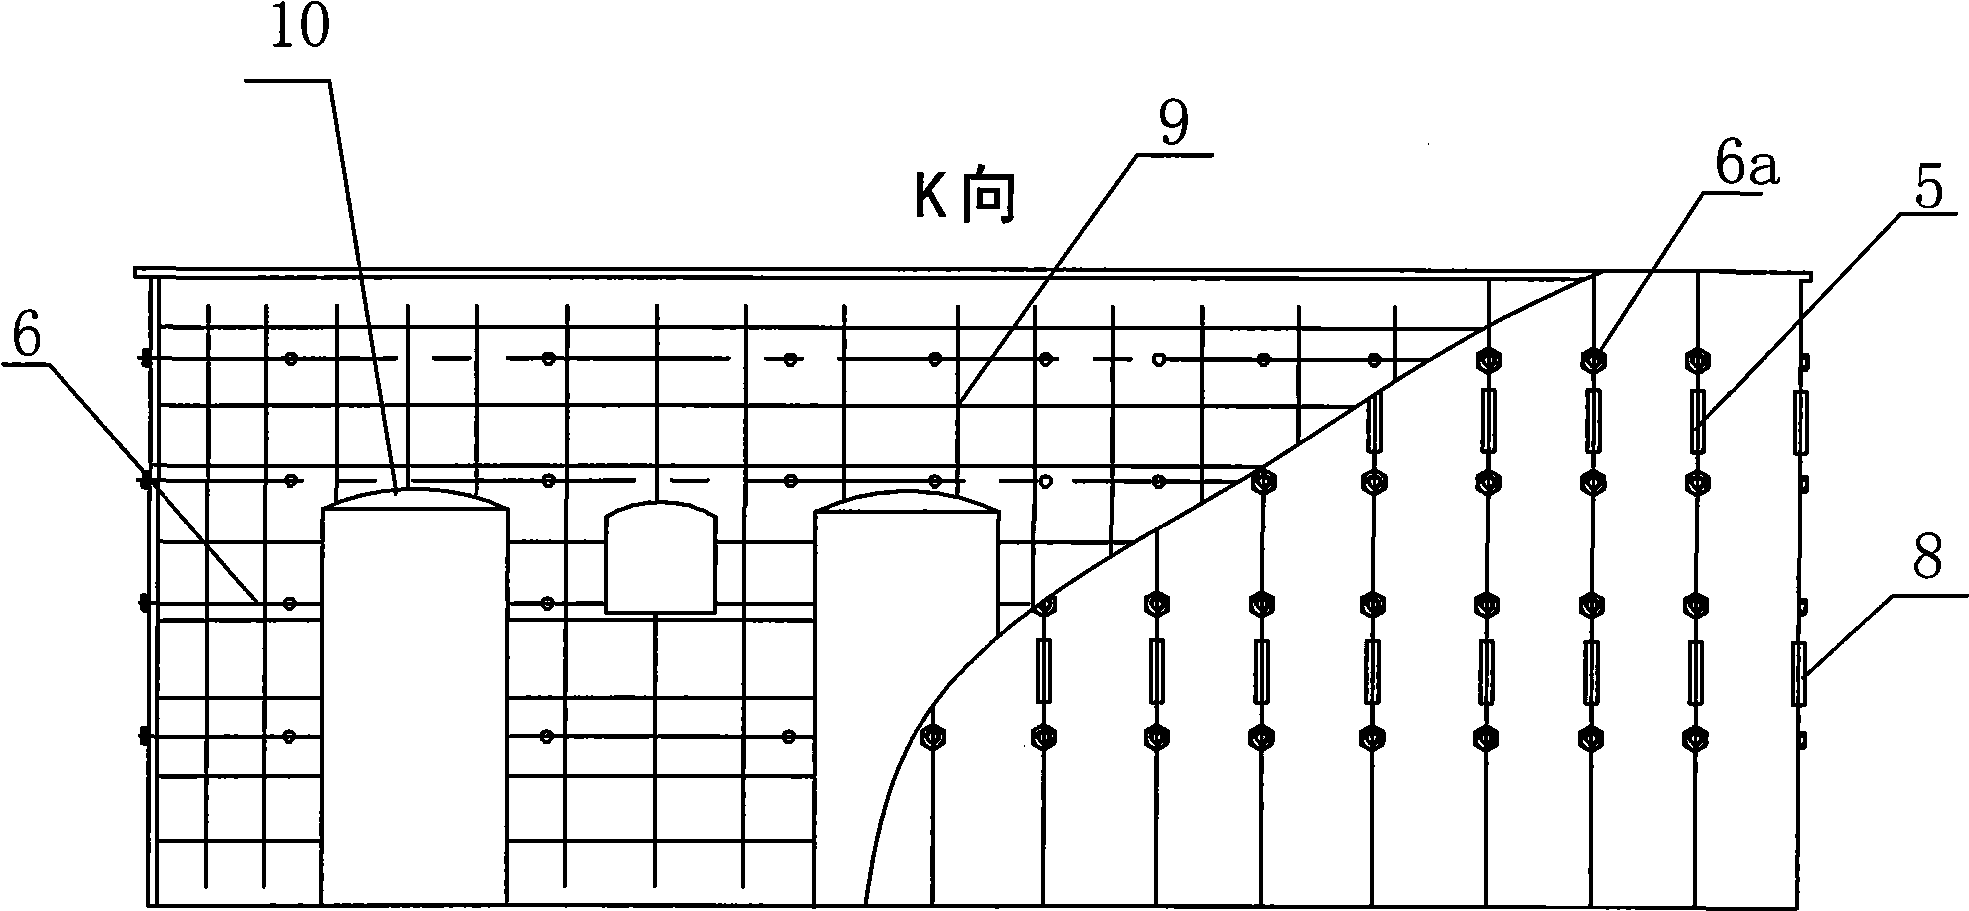 Integral wall production method